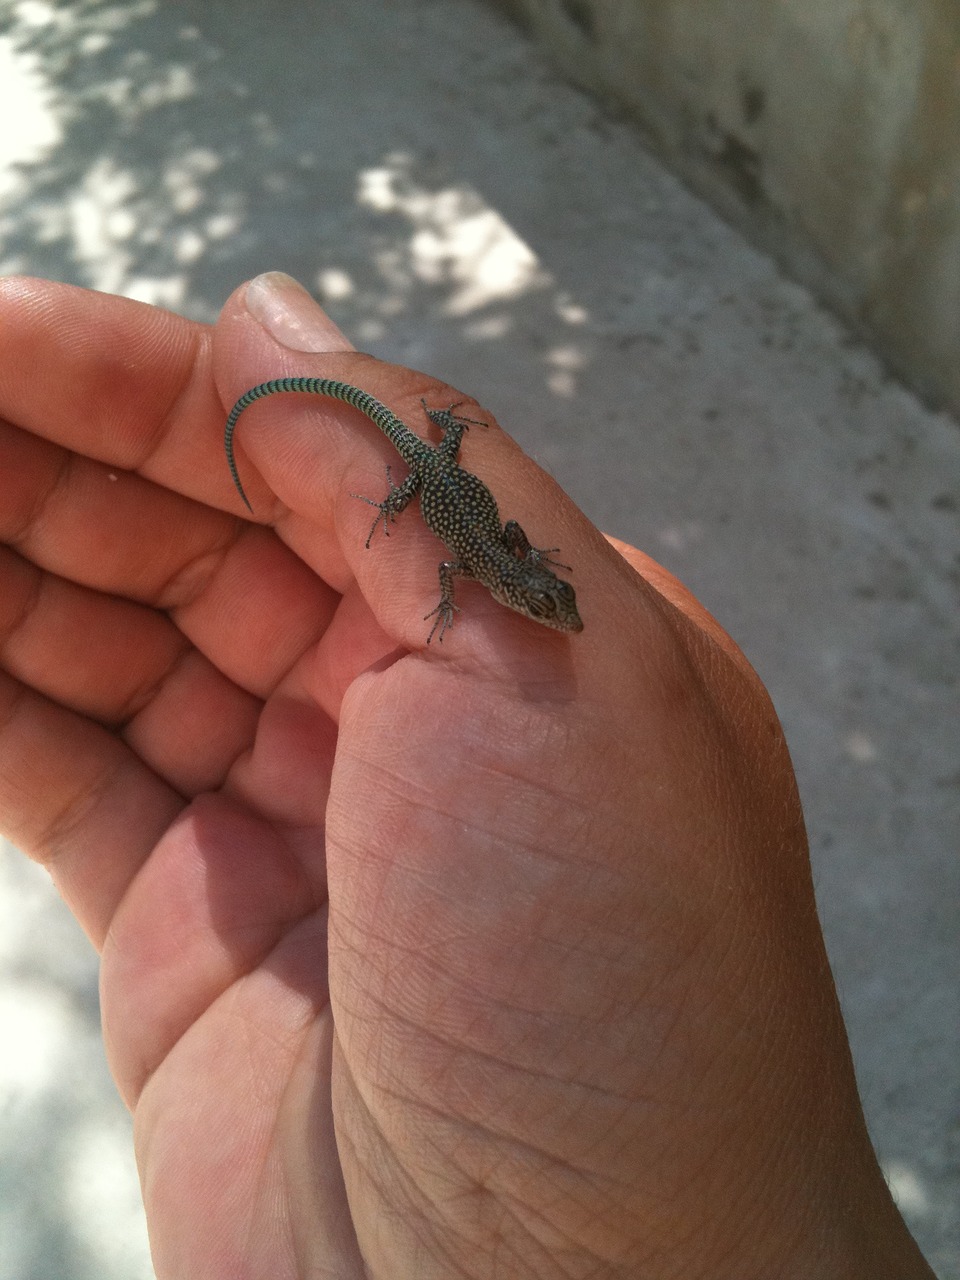 lizard hand reptile free photo